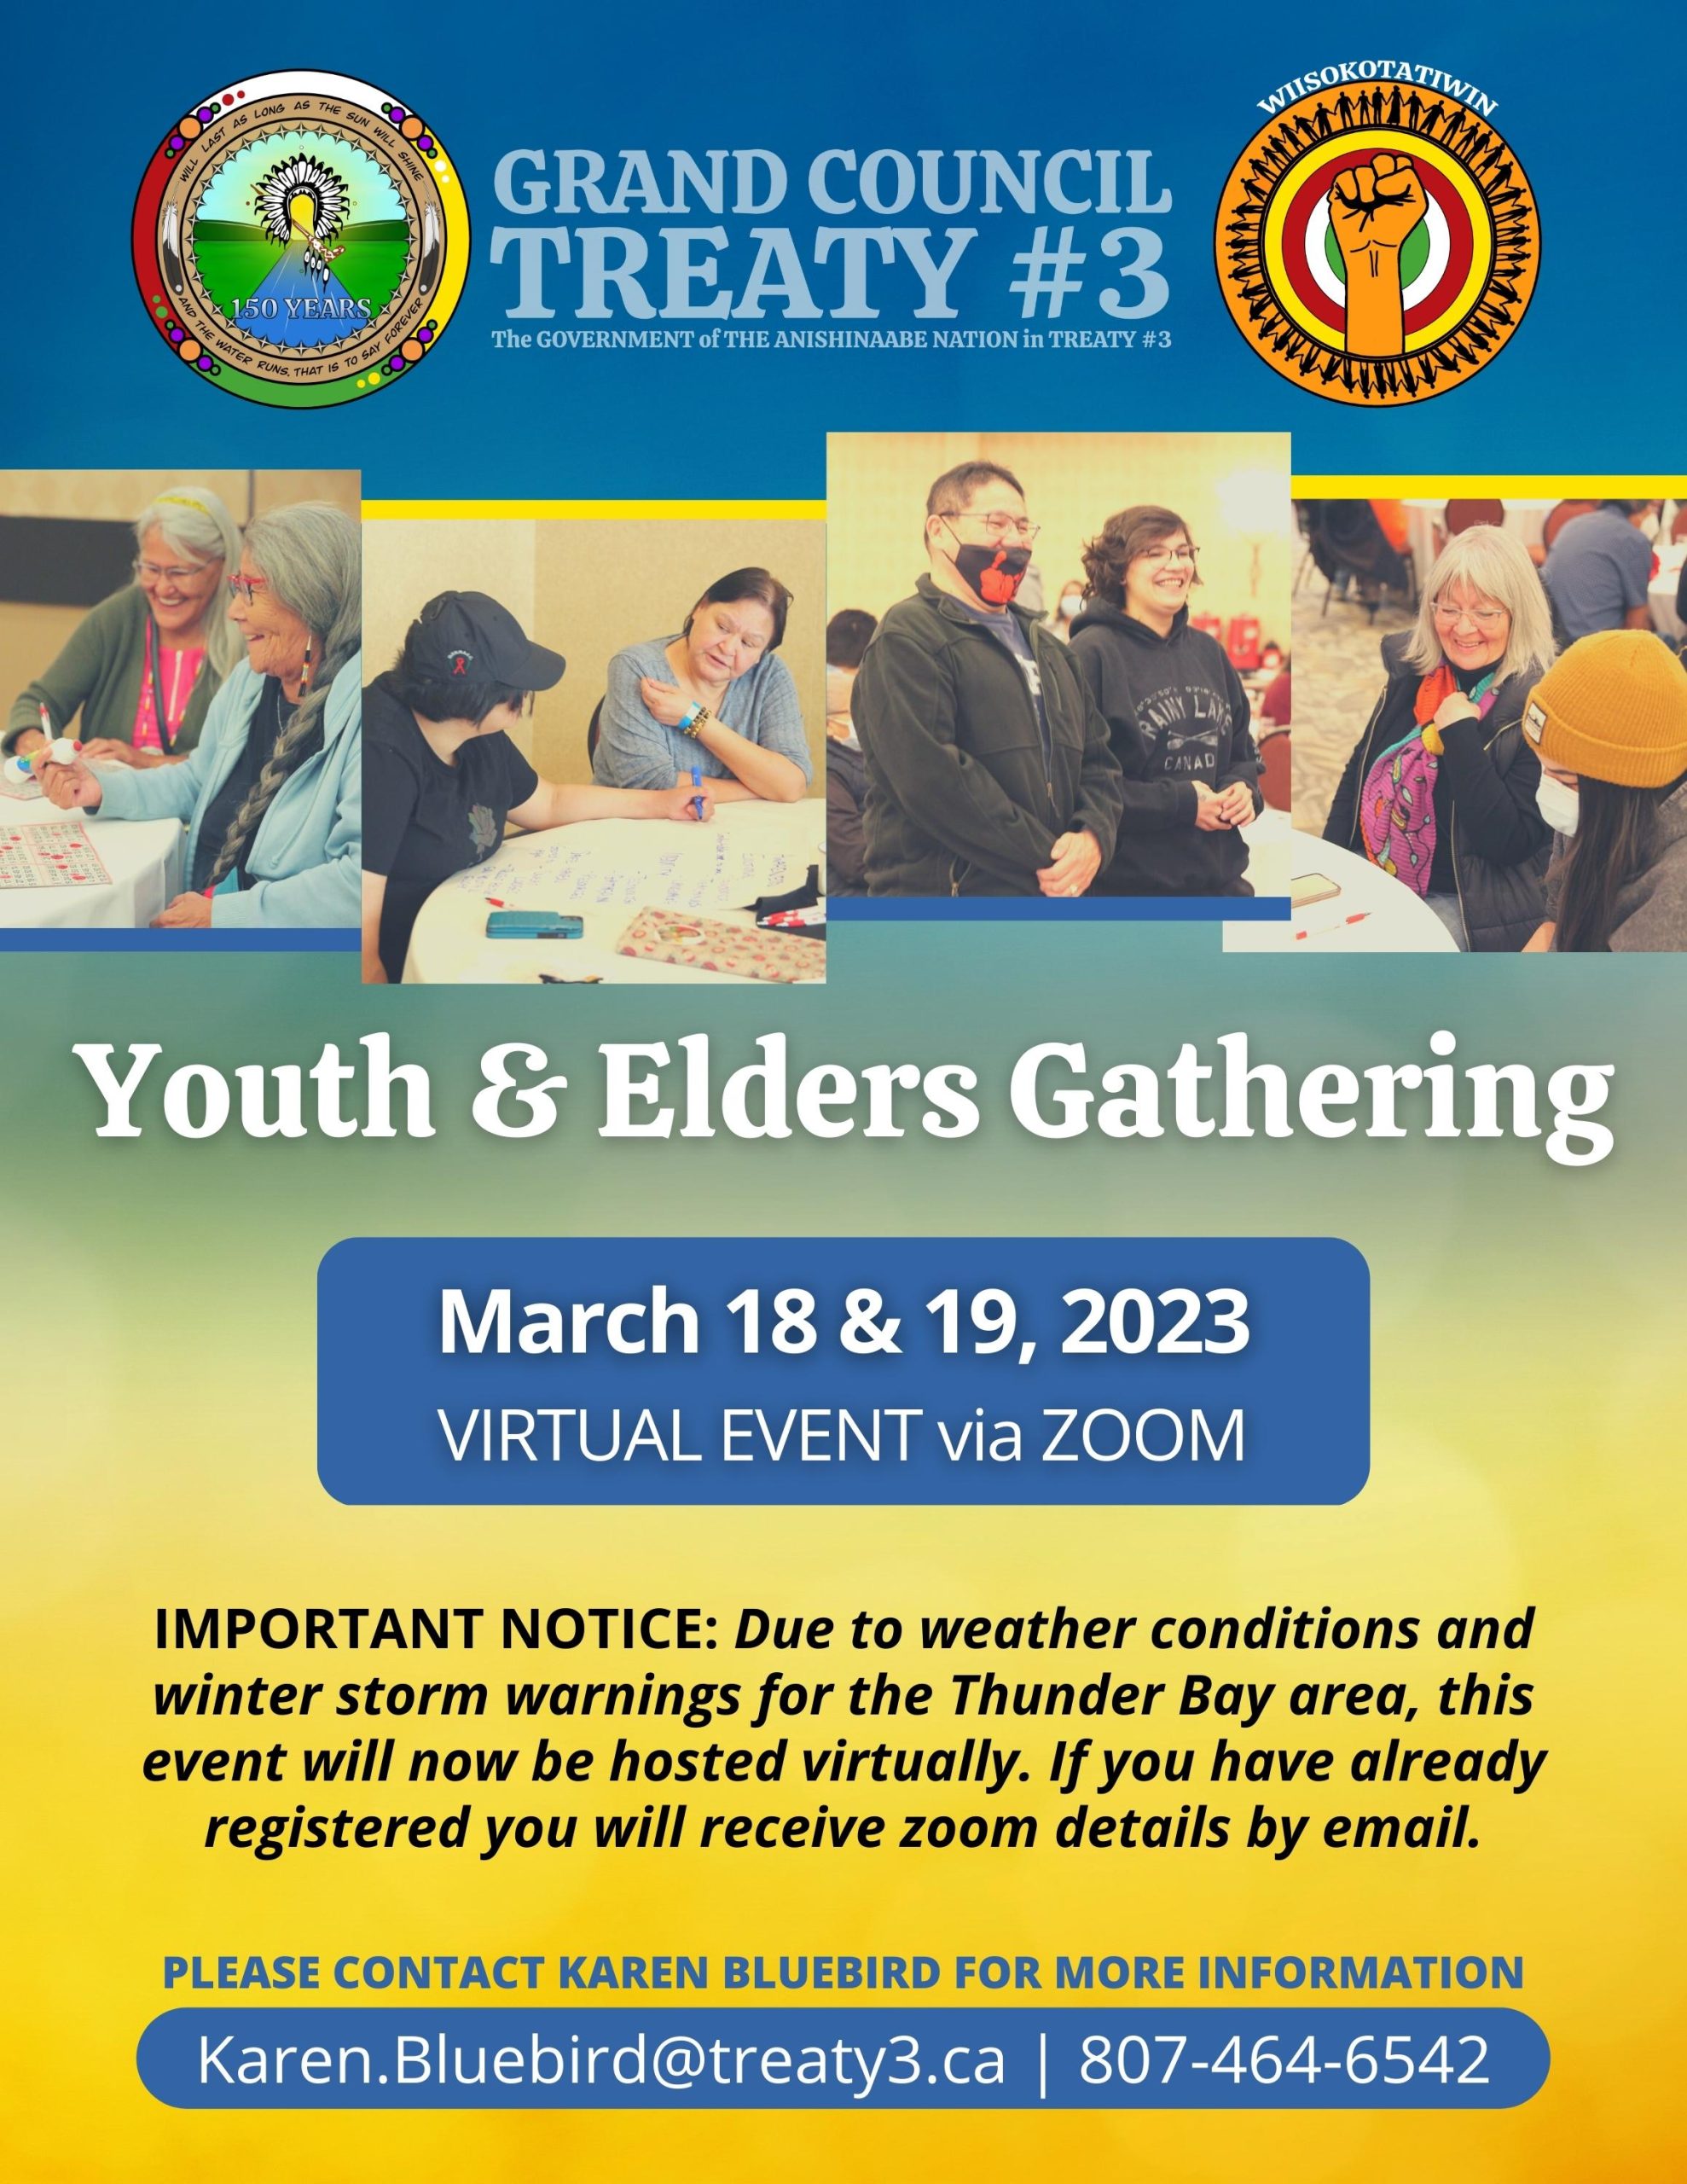 Virtual Youth & Elders Gathering